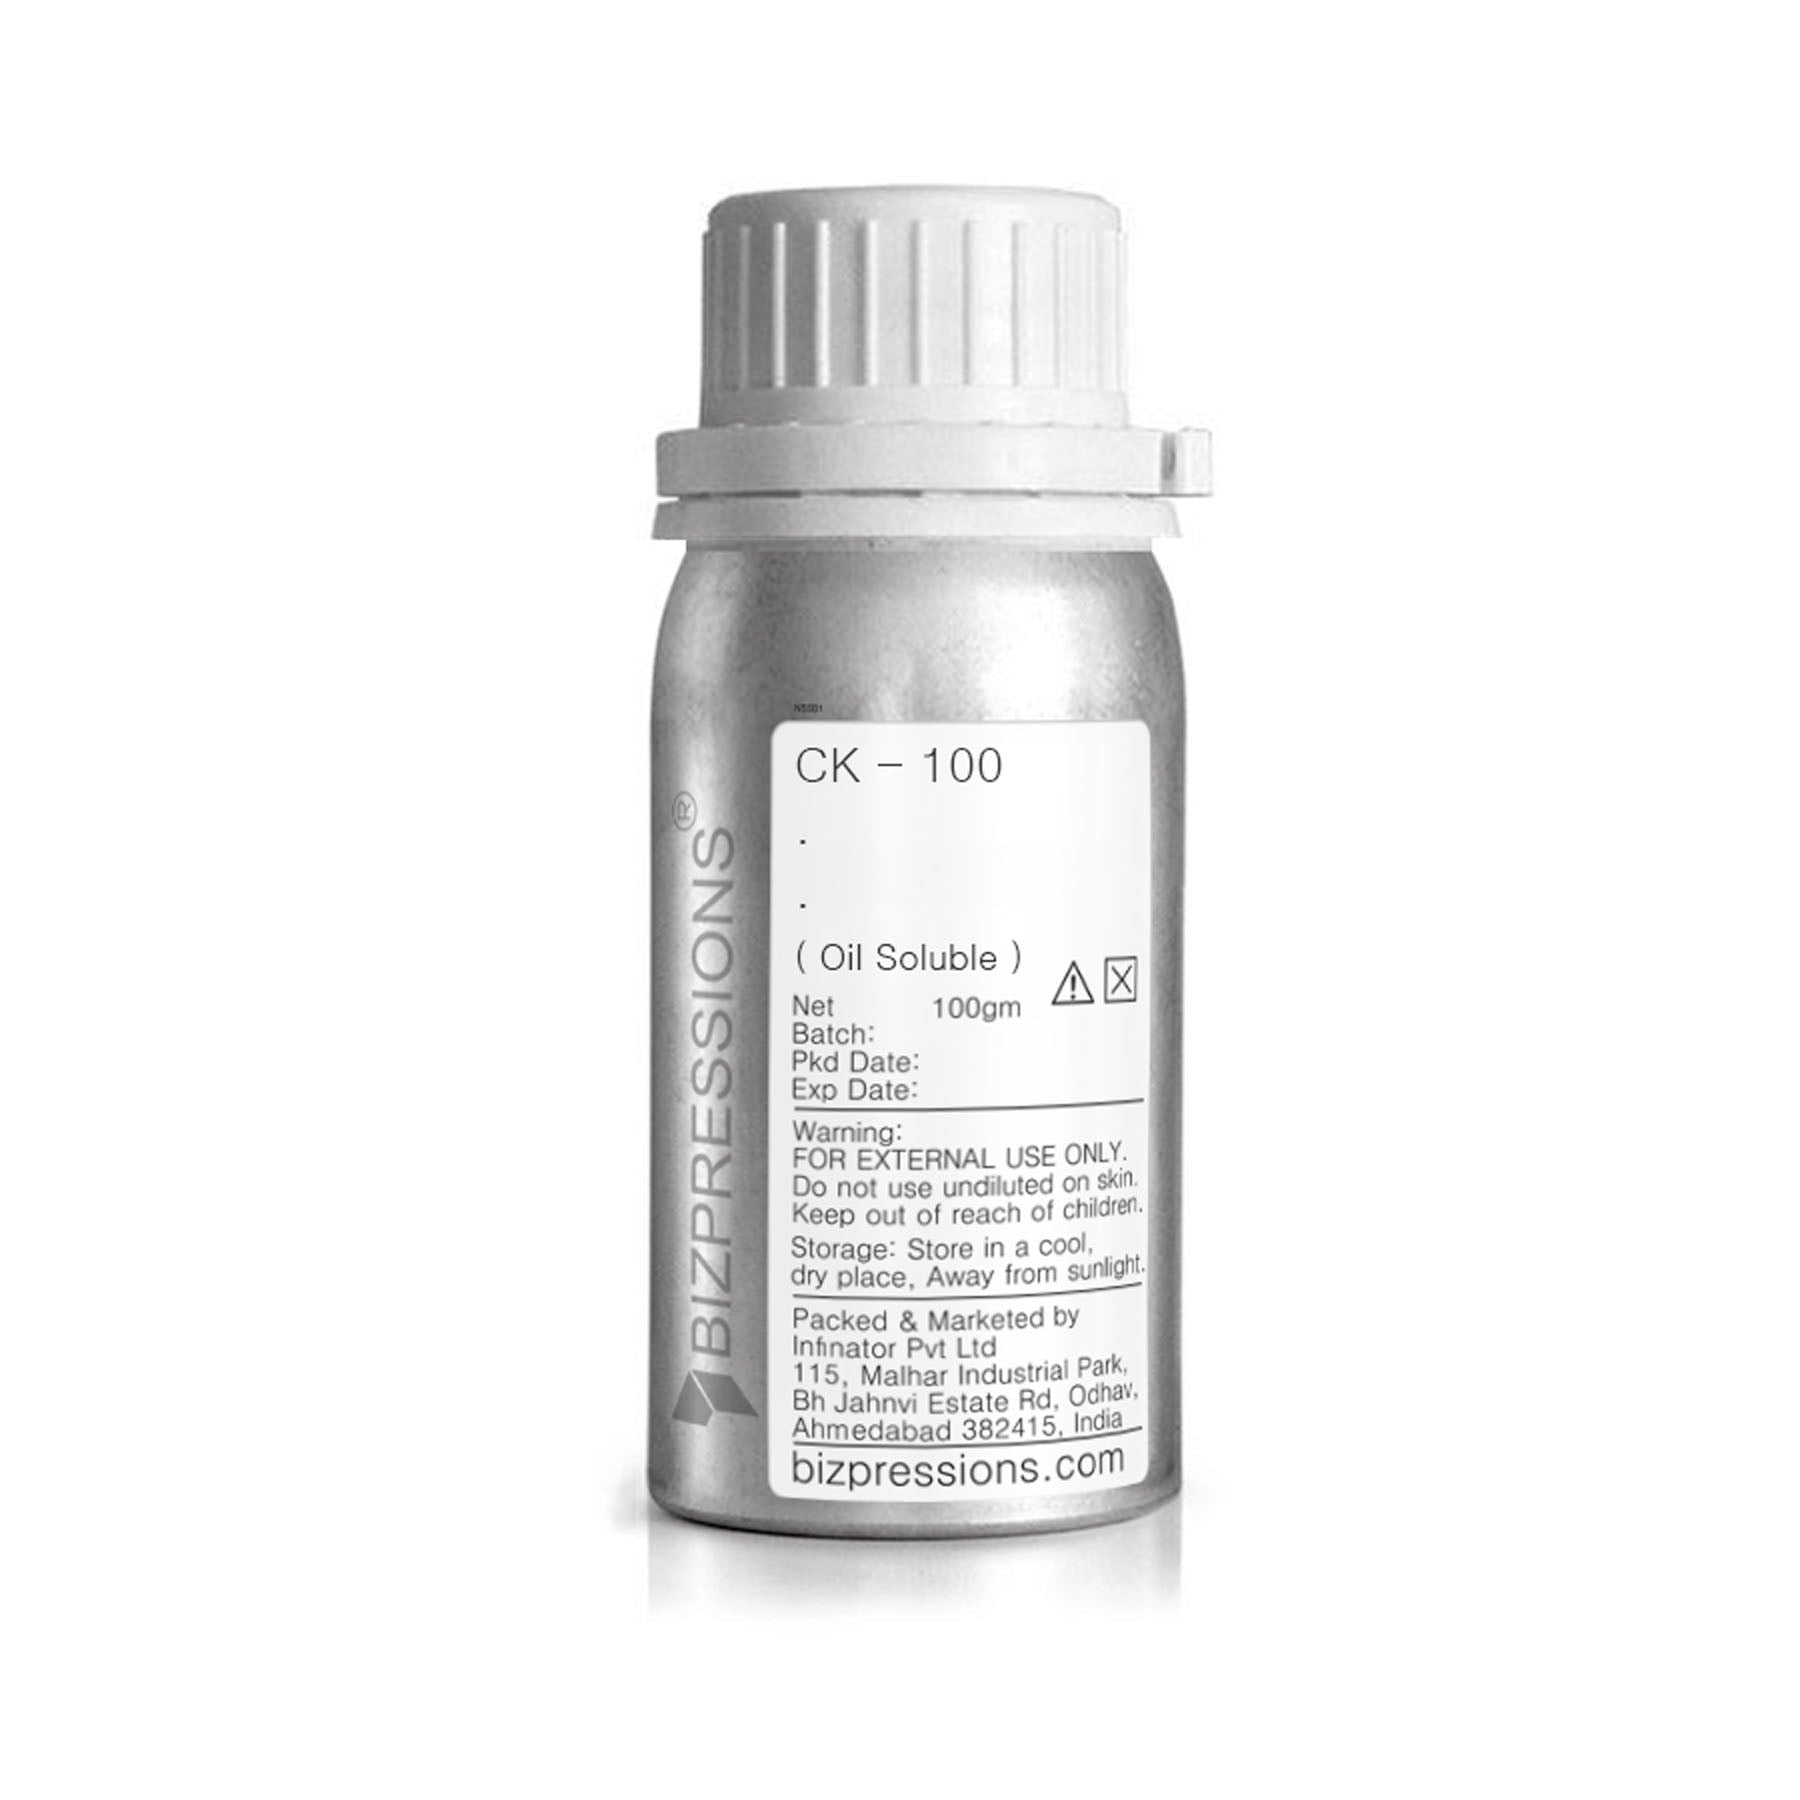 CK - 100 - Fragrance ( Oil Soluble ) - 100 gm